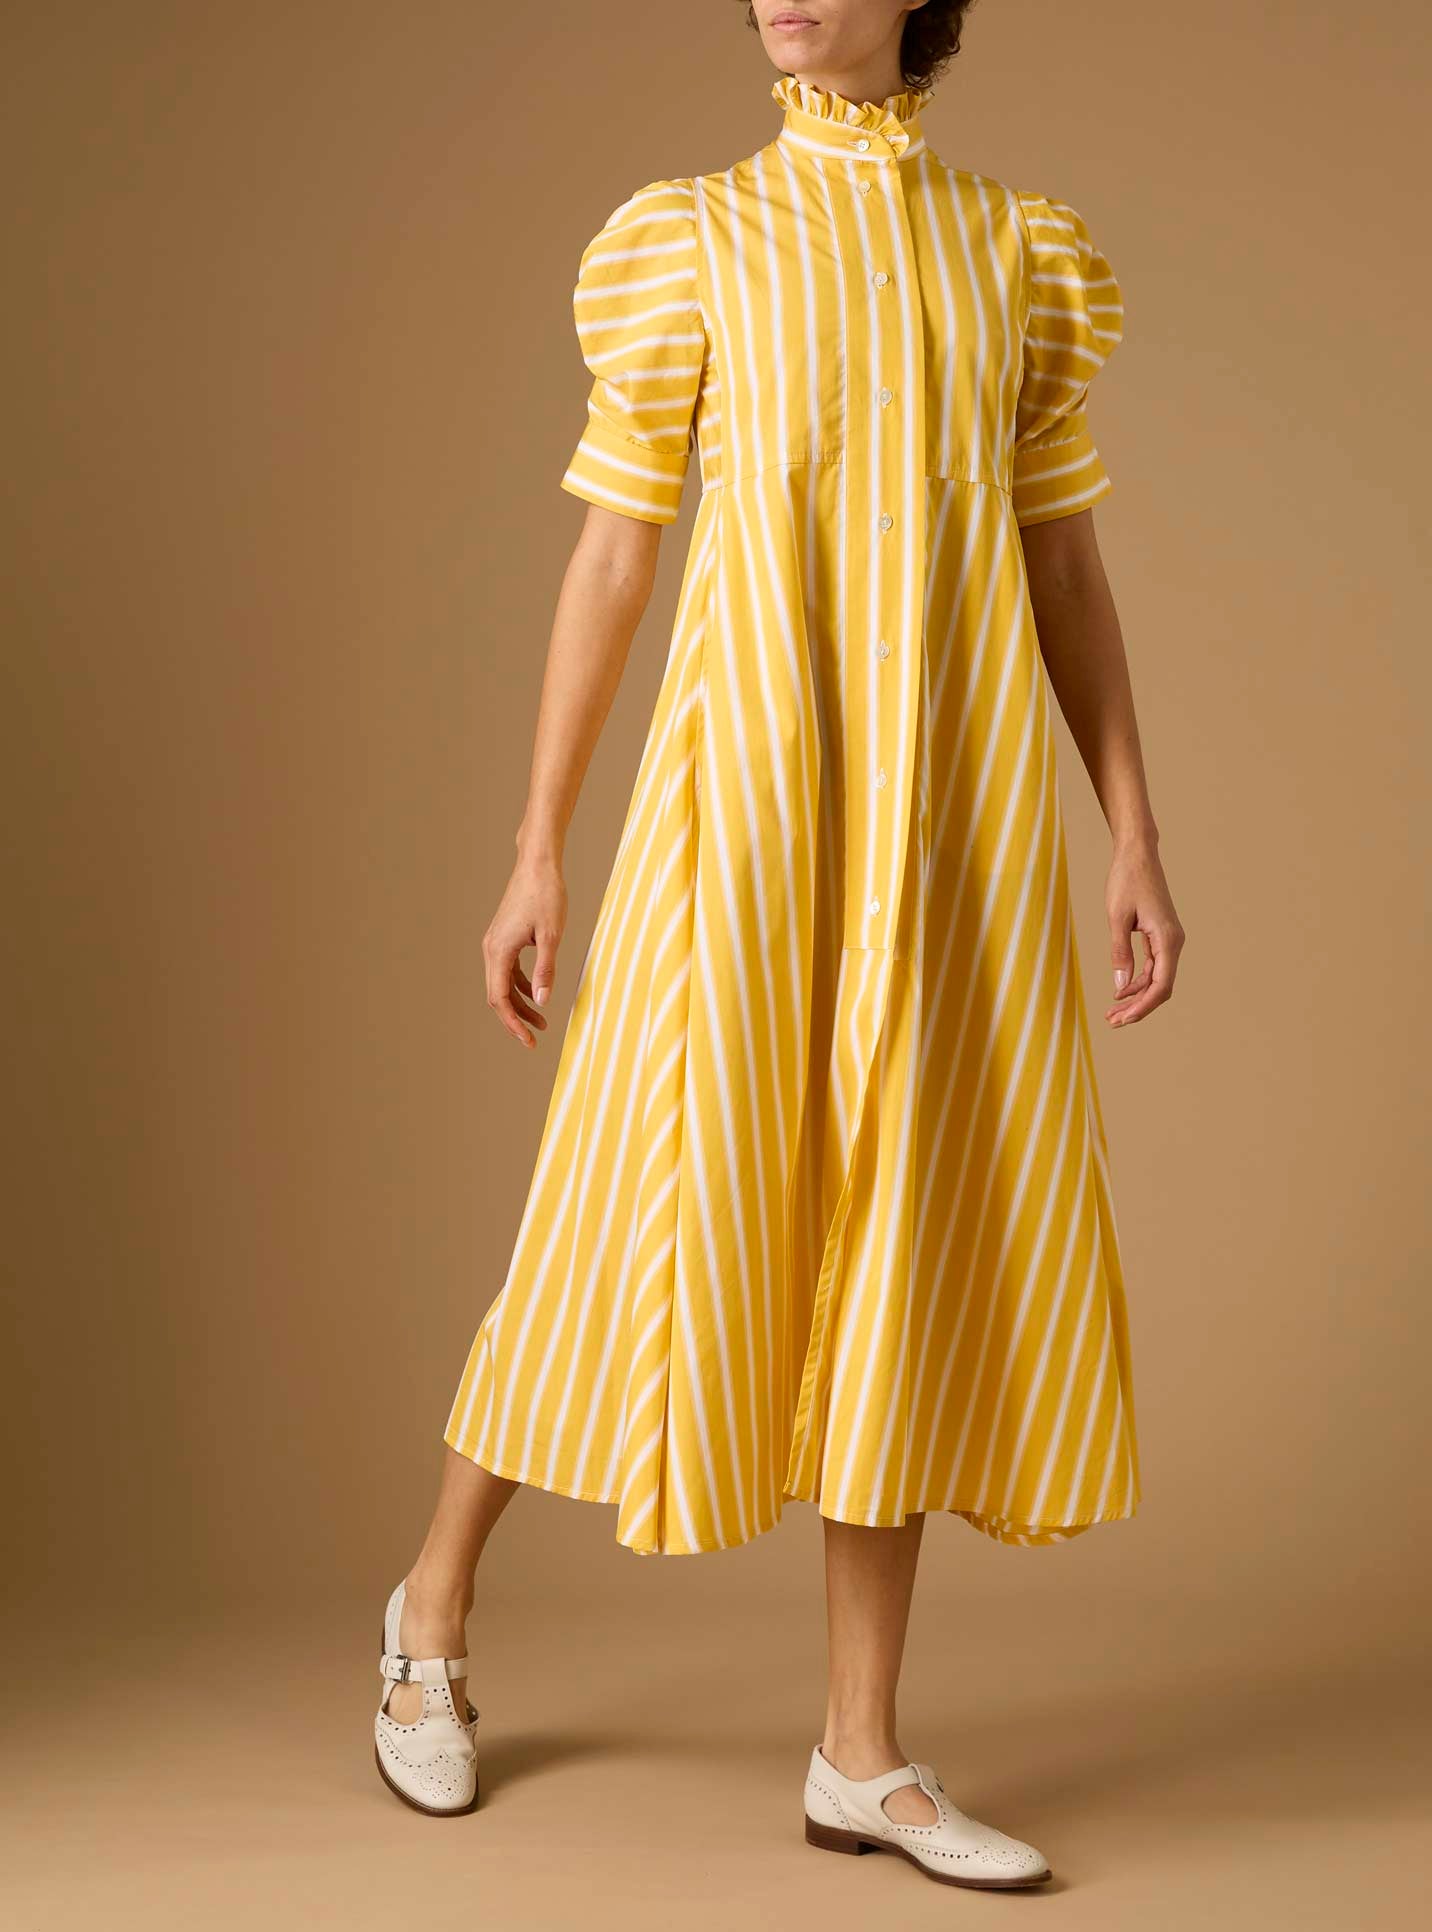 Venetia Downing Poplin Yellow Dress by Thierry Colson